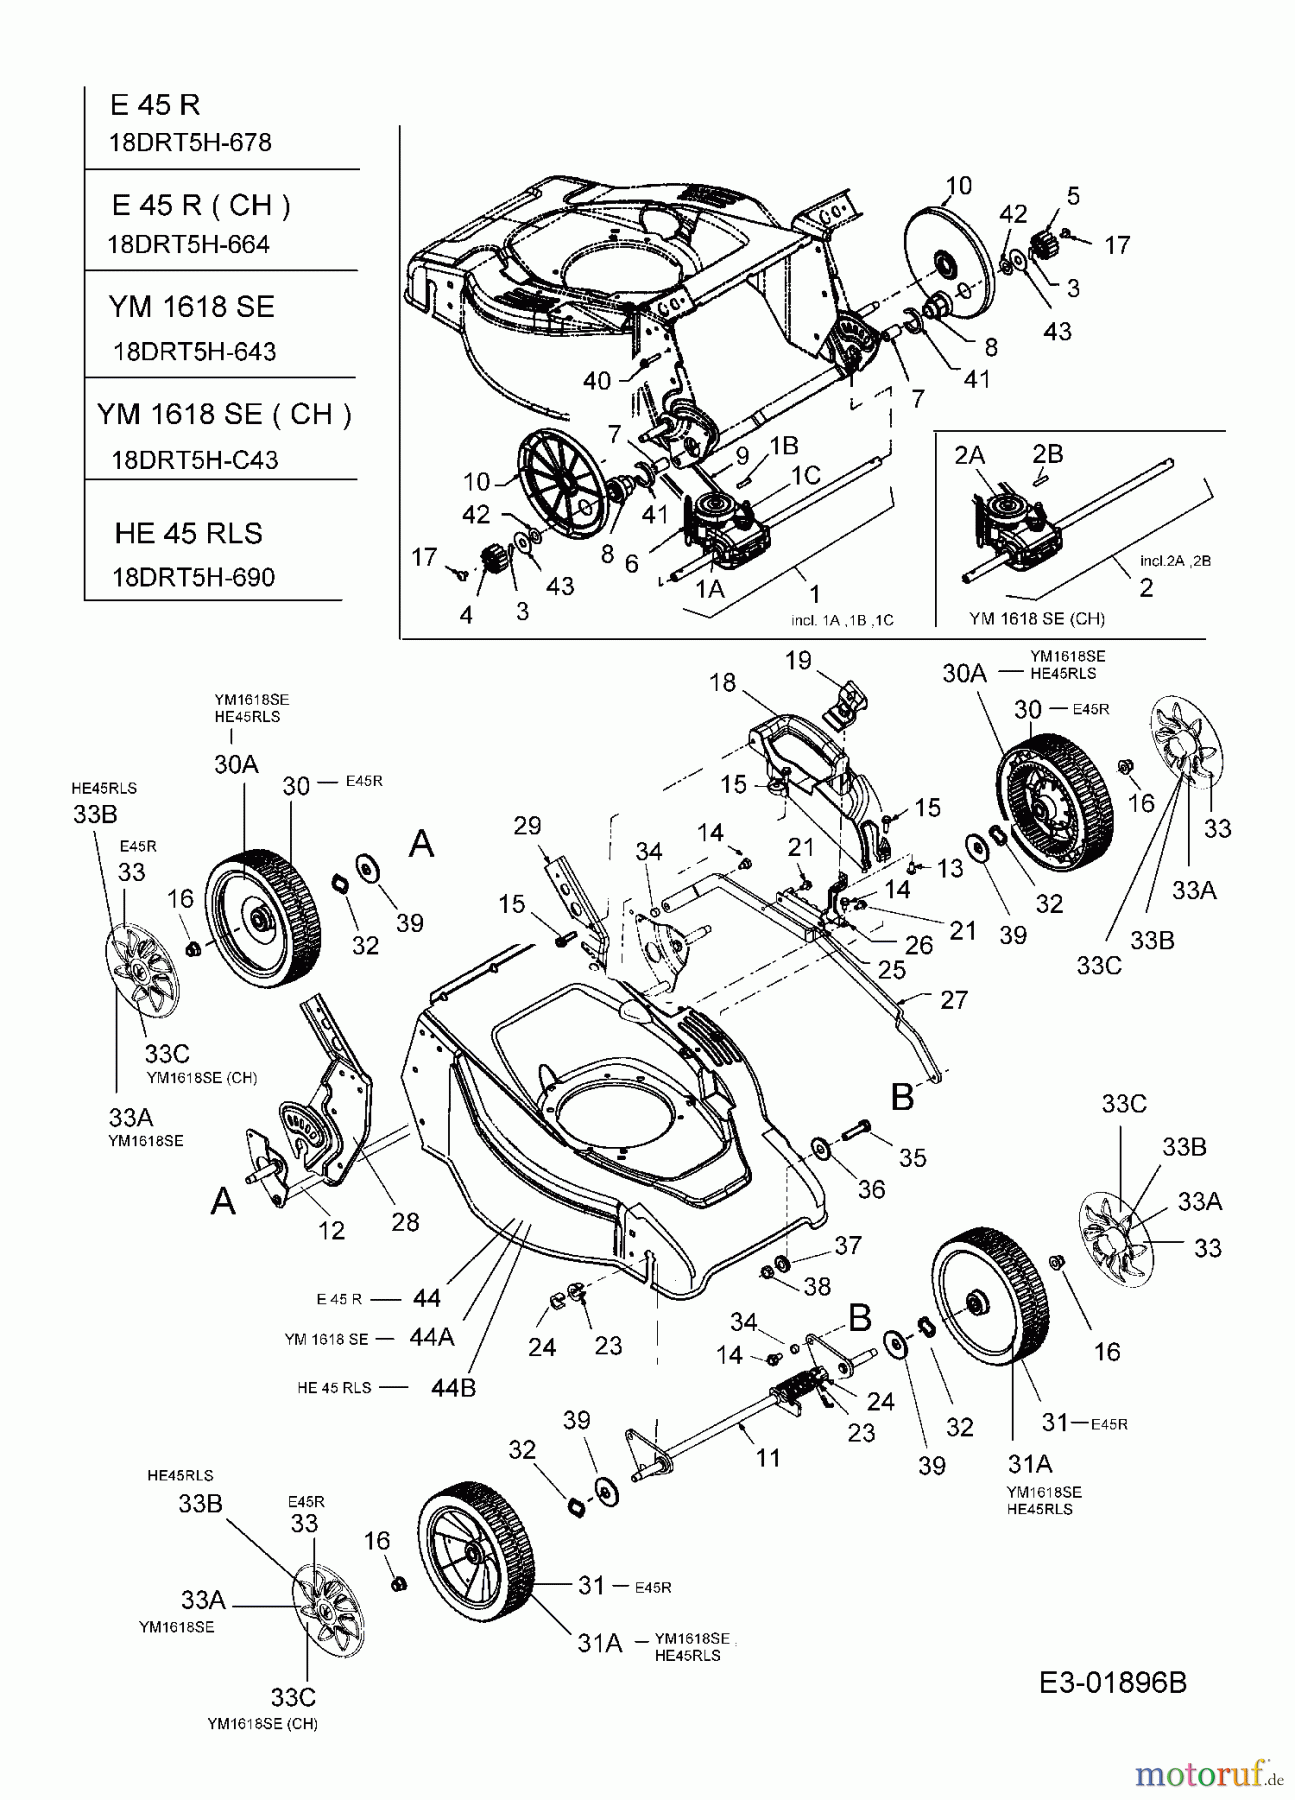  Gutbrod Electric mower self propelled HE 45 RLS 18DRT5H-690  (2005) Gearbox, Wheels, Cutting hight adjustment